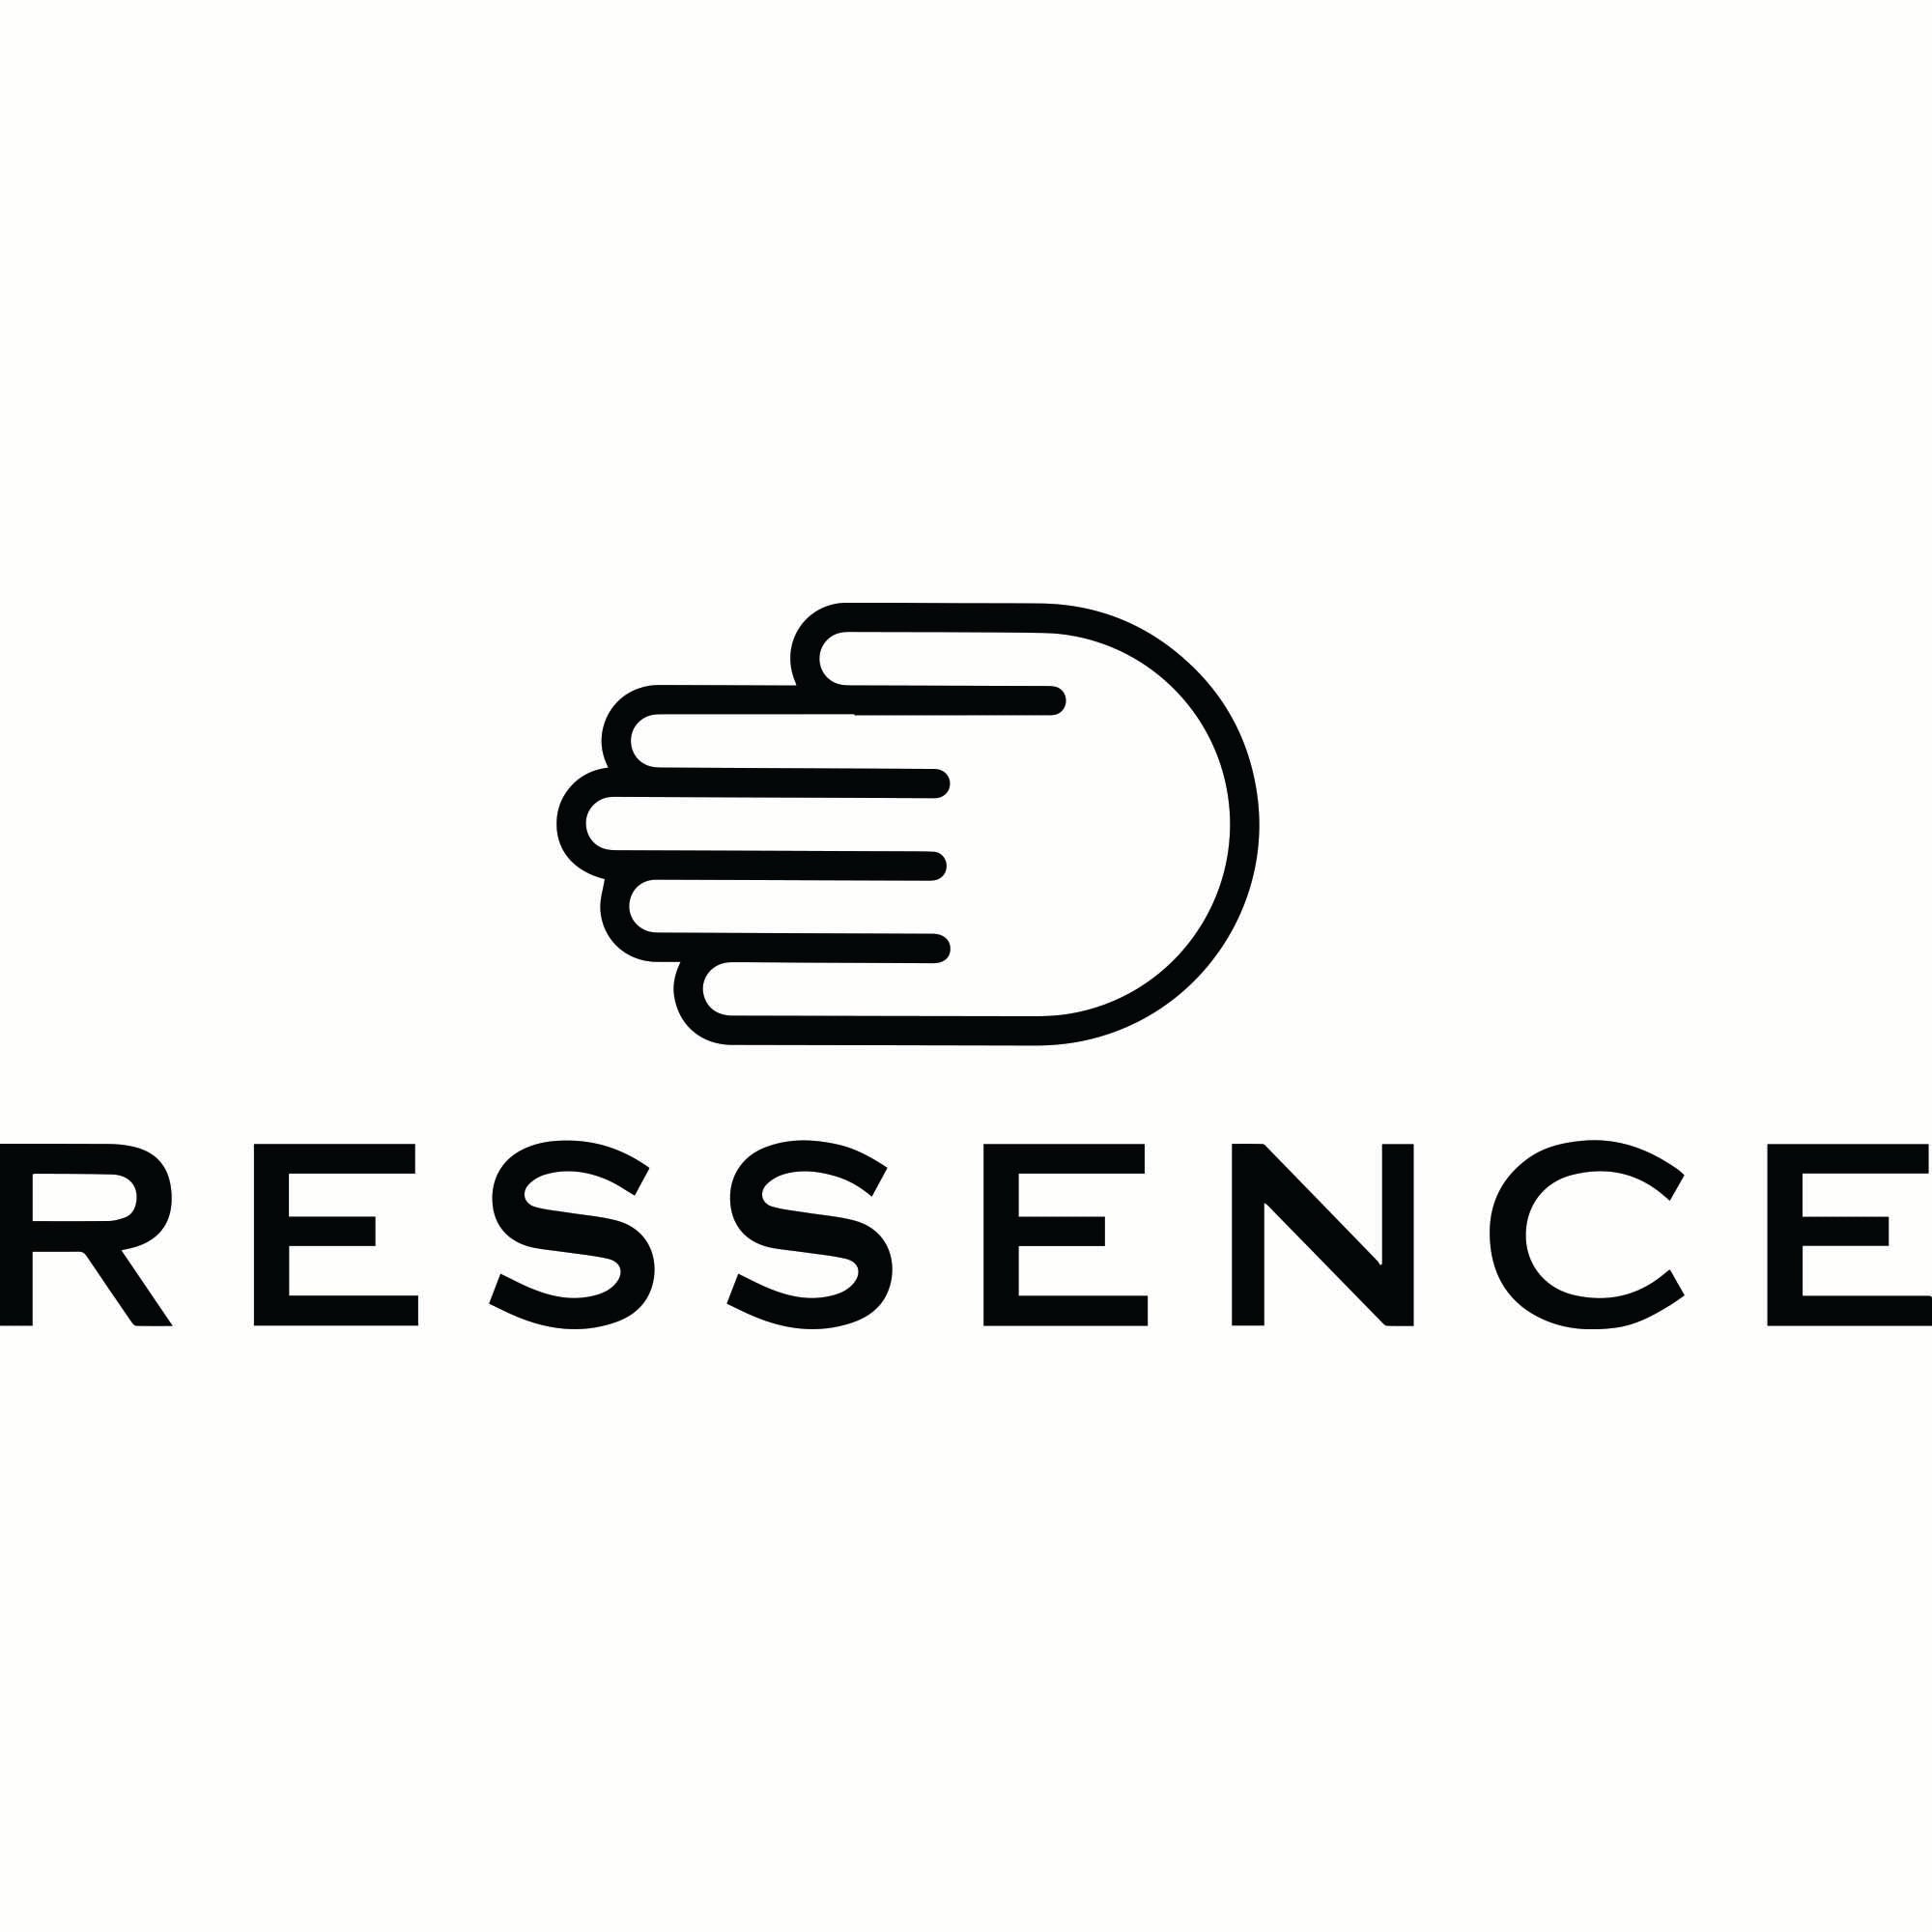 Ressence Logo